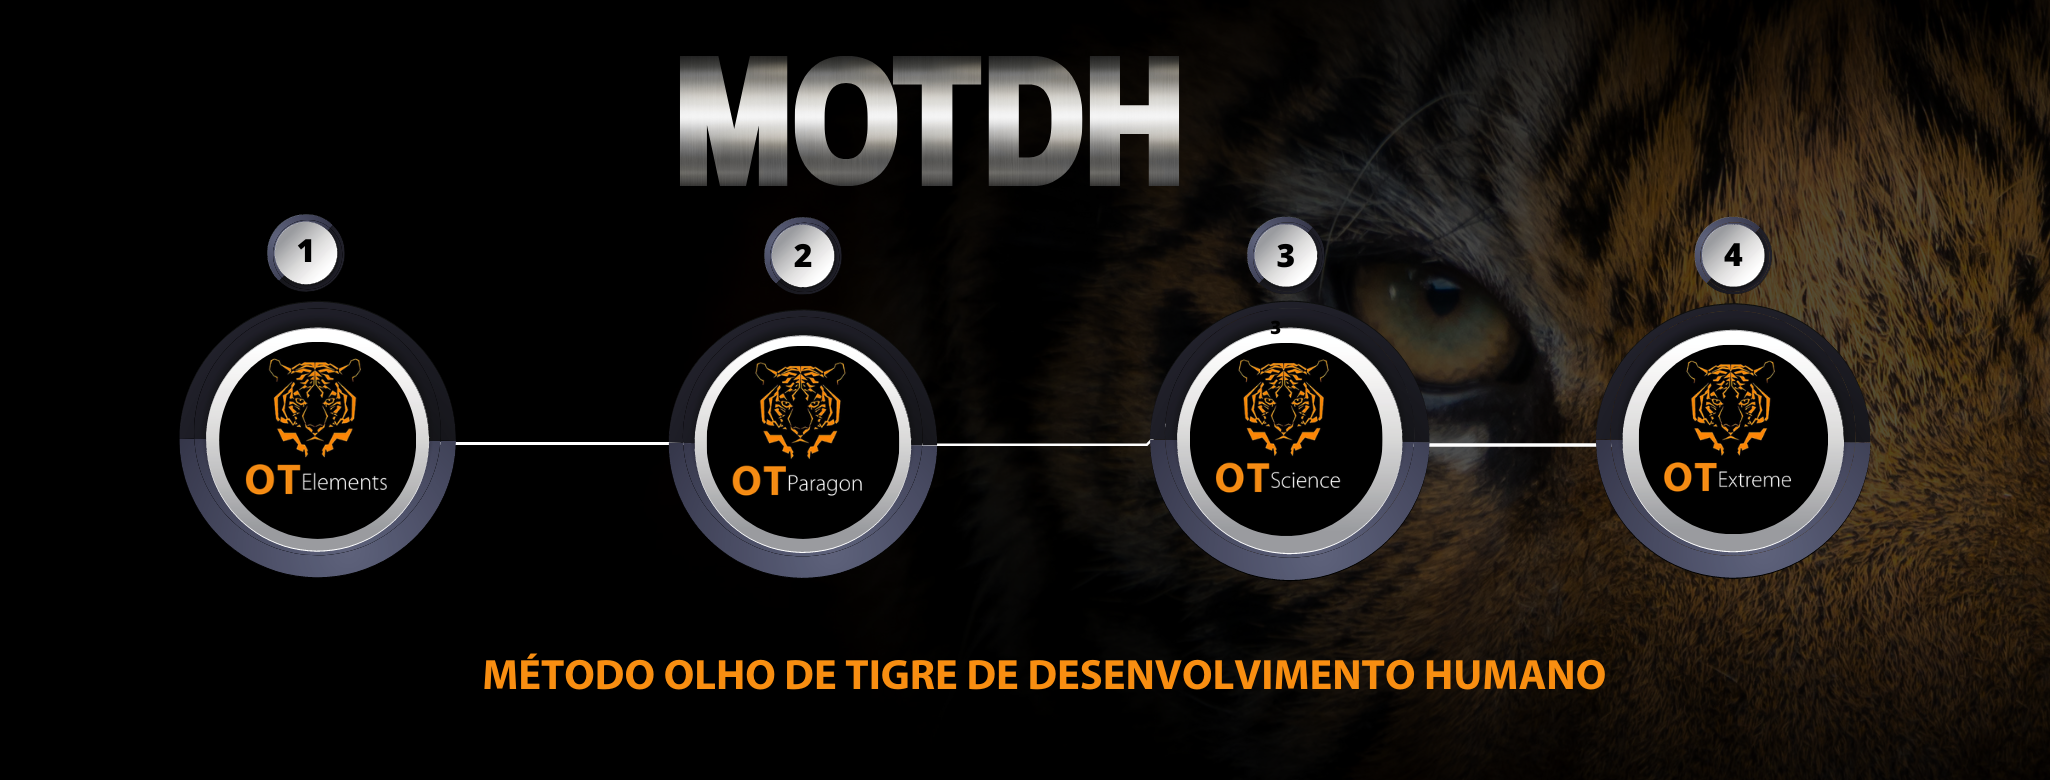 MOTDH - Método Olho de Tigre de Desenvolvimento Humano